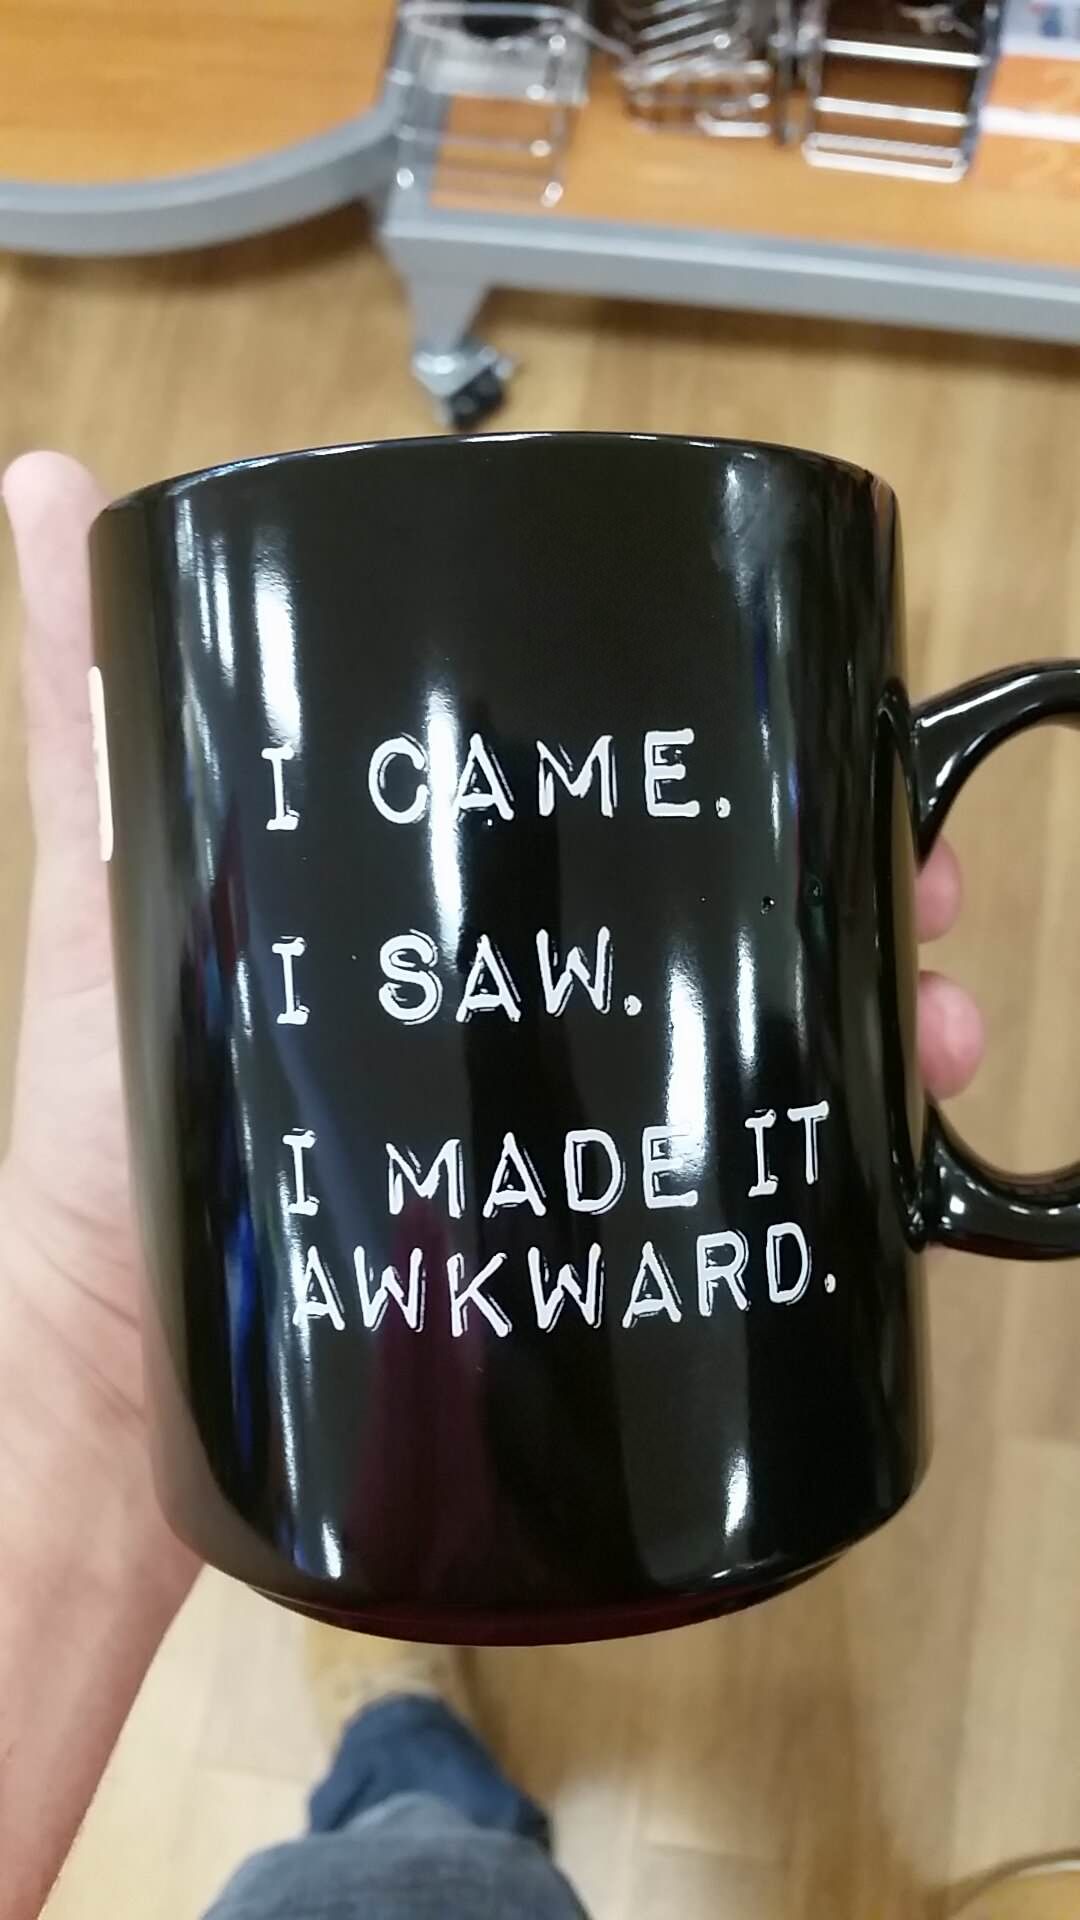 Me as a mug